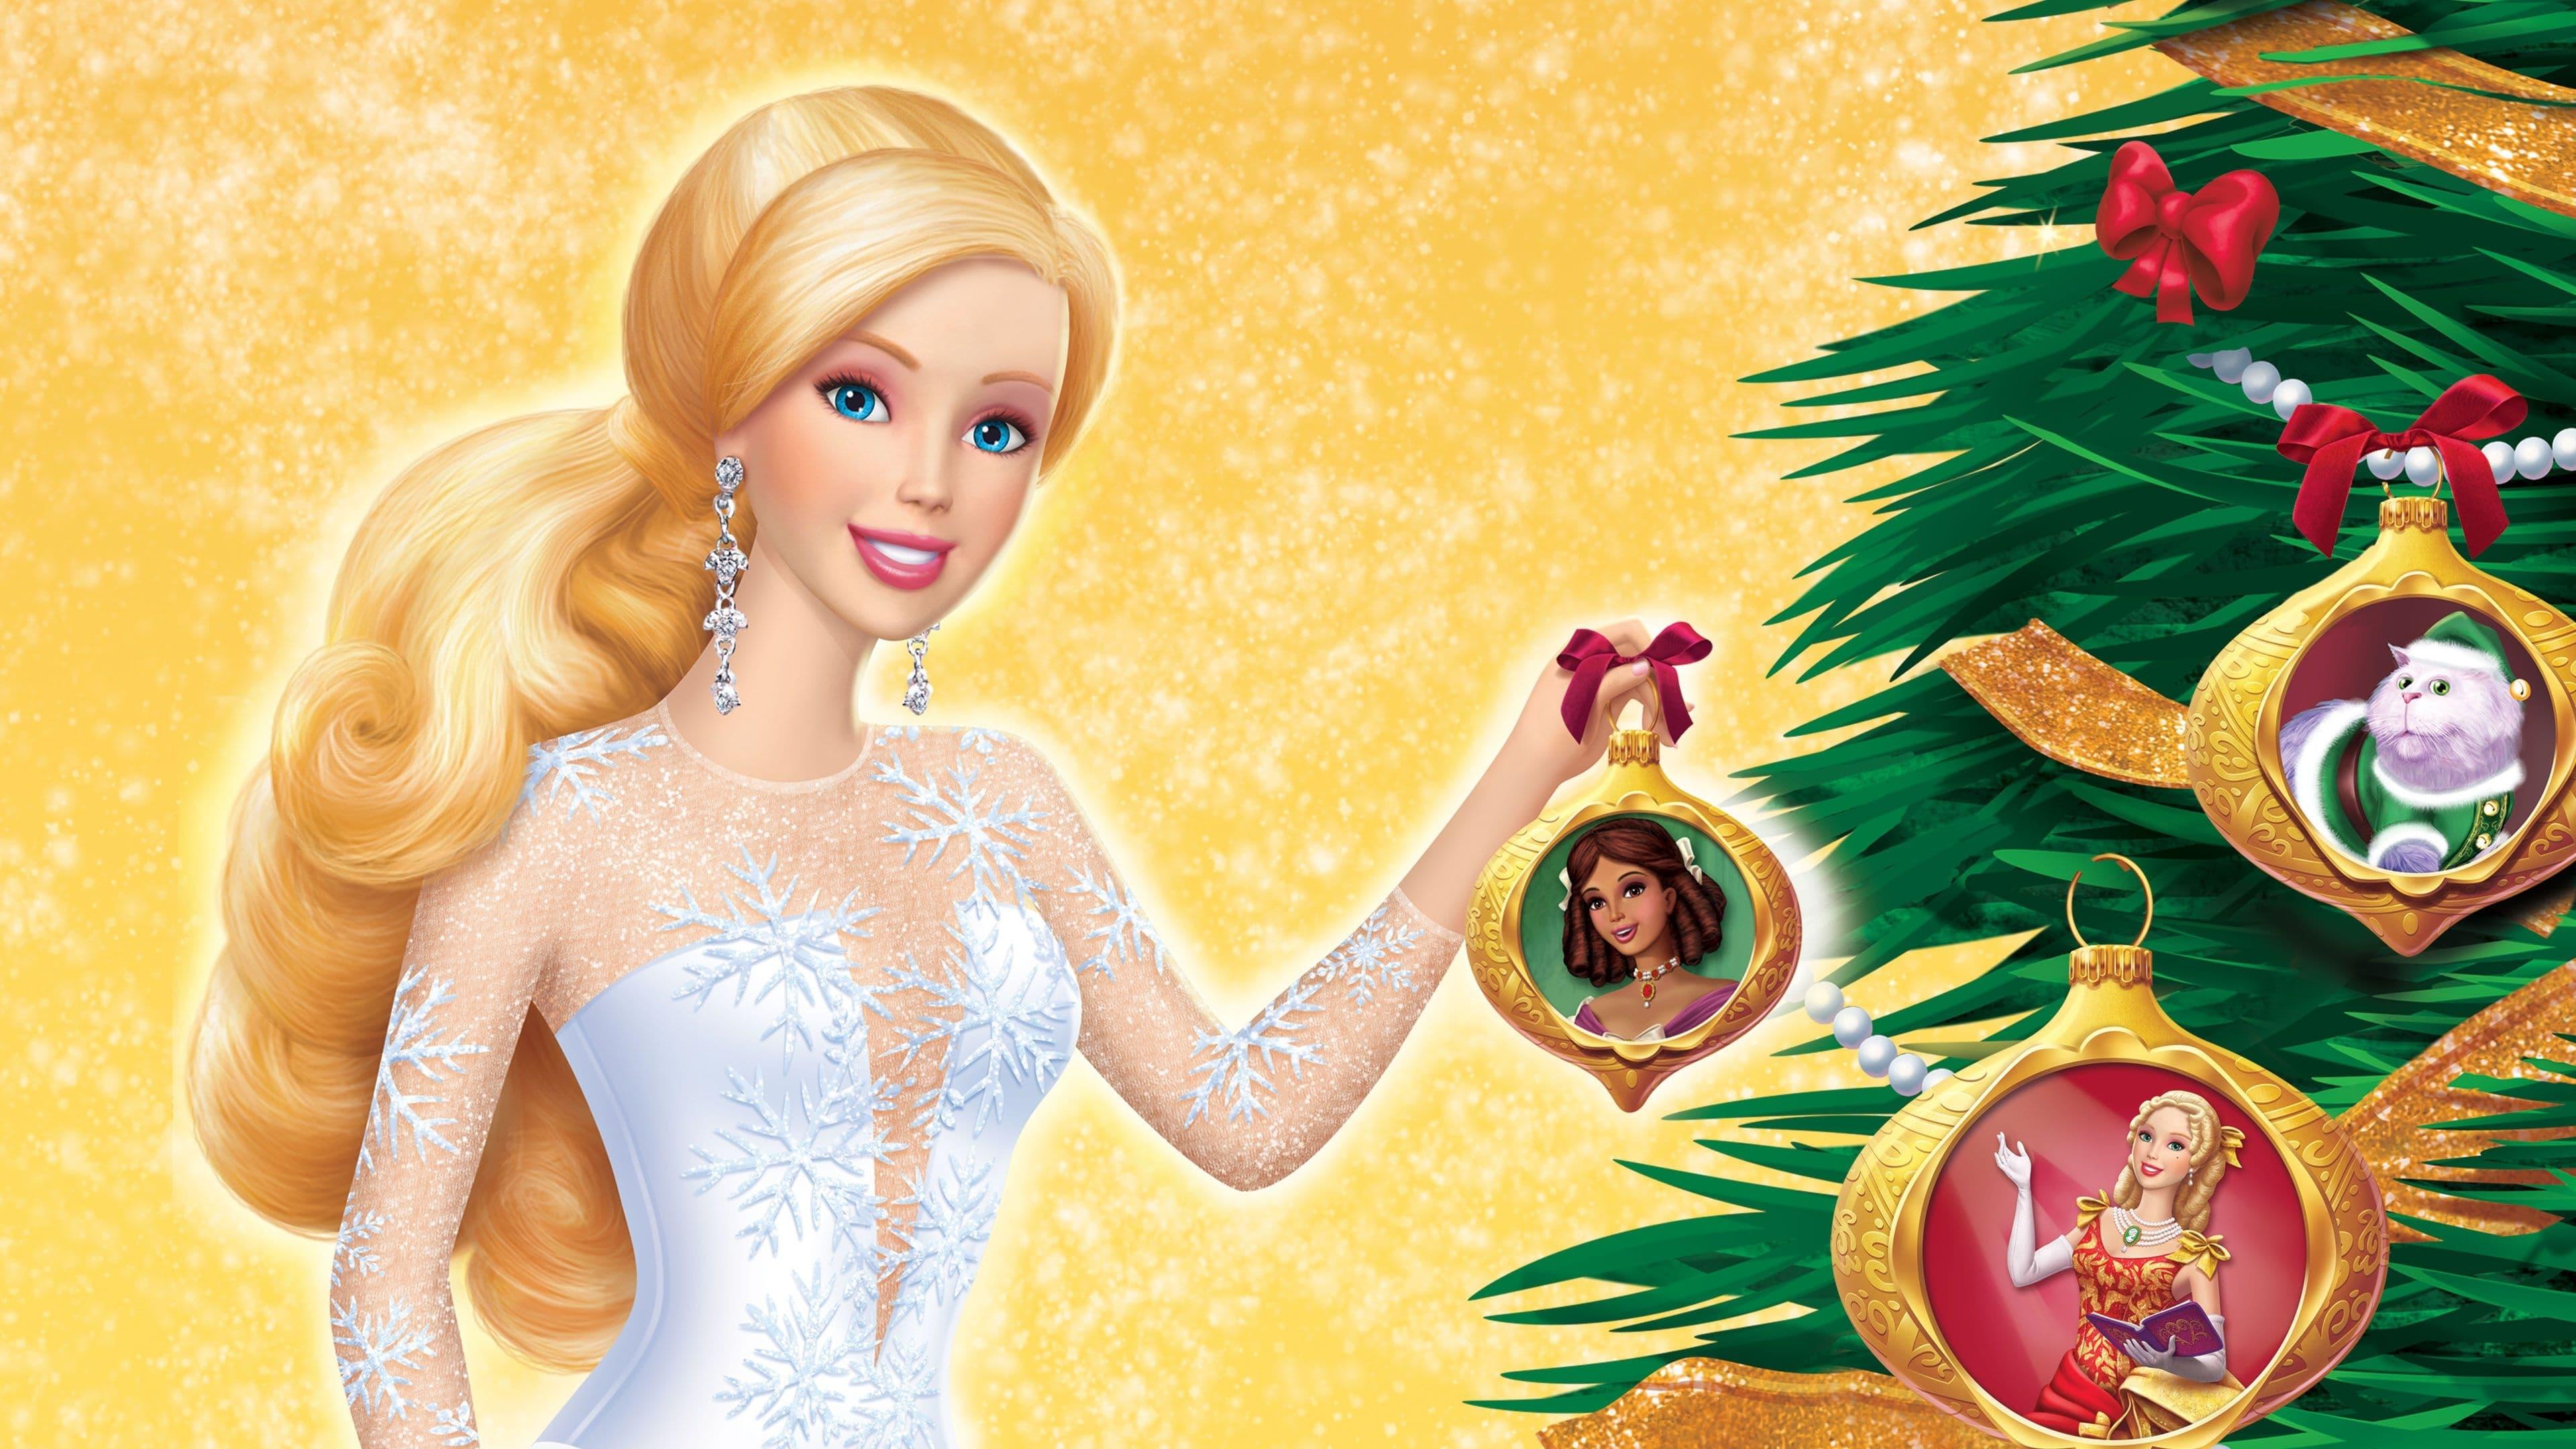 Barbie in 'A Christmas Carol' backdrop